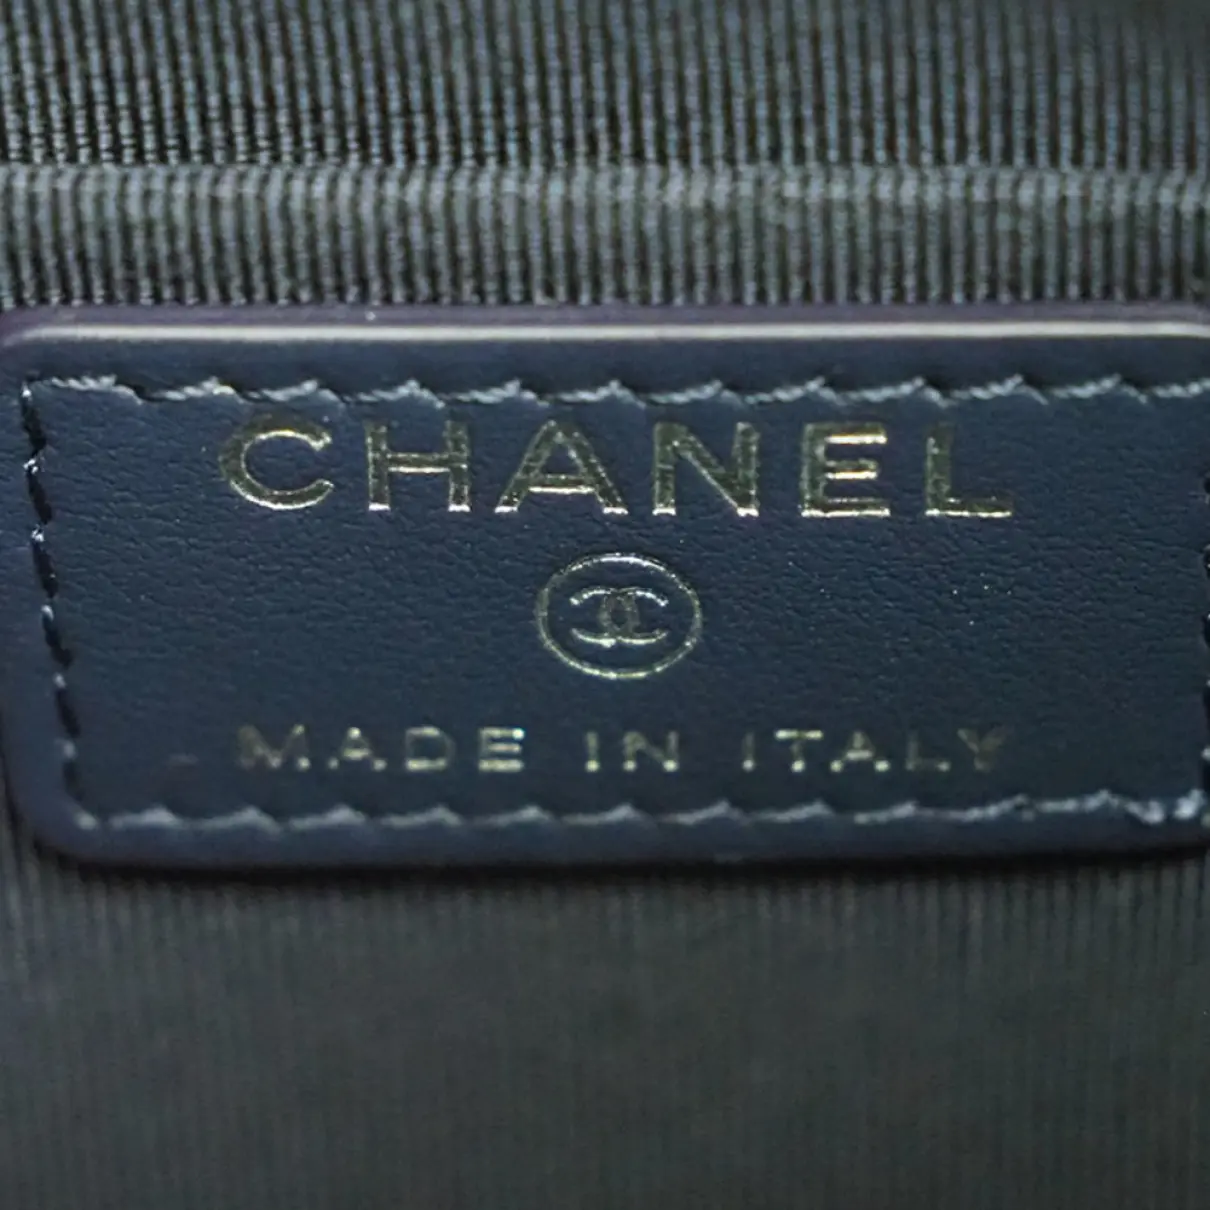 2.55 mini bag Chanel